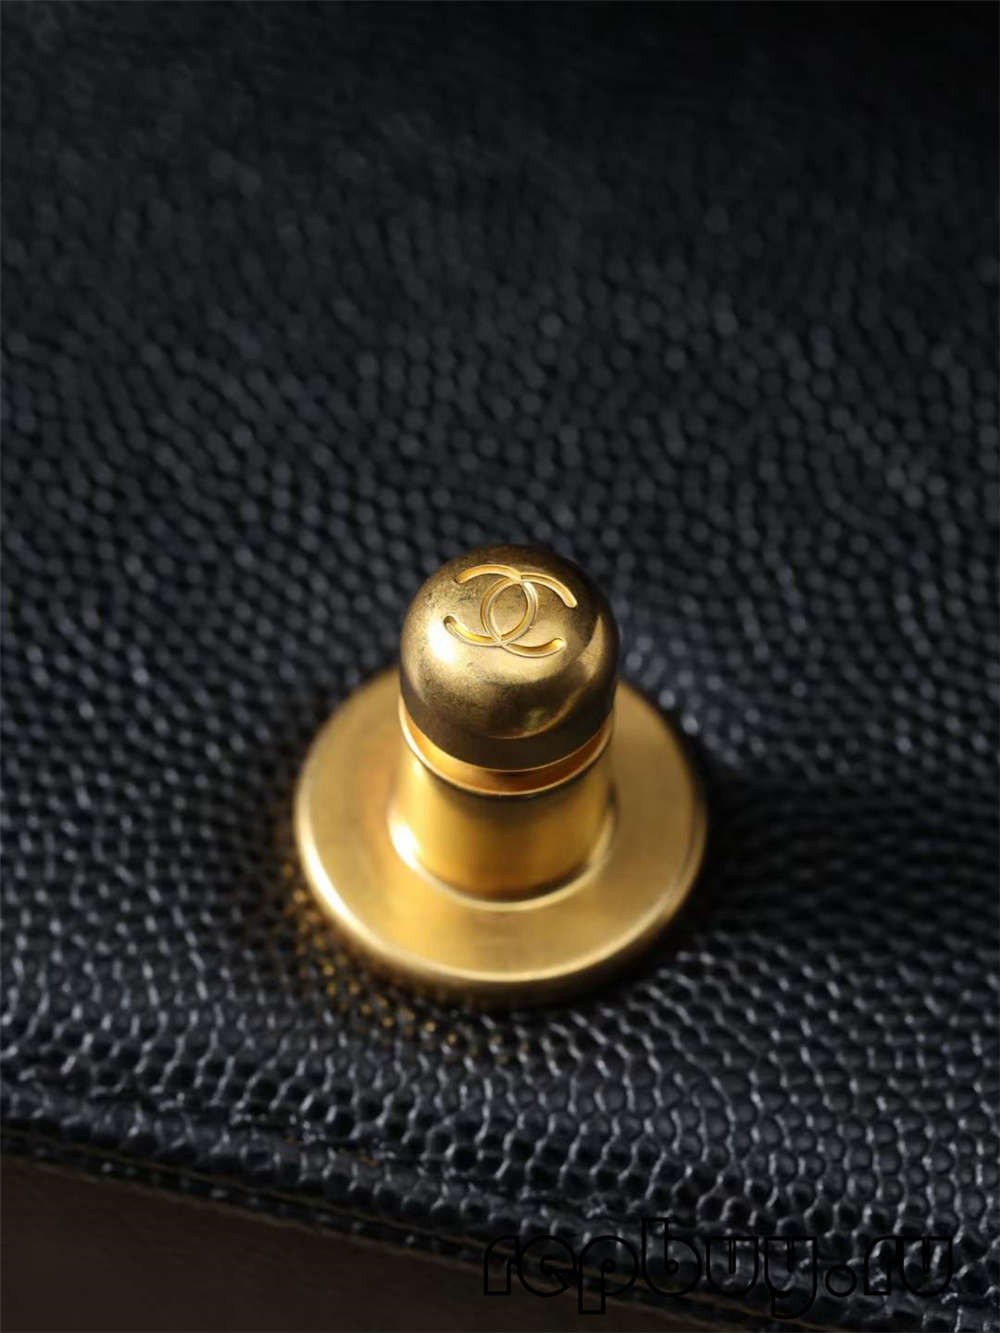 Chanel Le boy top replica handbags small gold buckle latch detail (2022 Updated)-Best Quality Fake Louis Vuitton Bag Online Store, Replica designer bag ru